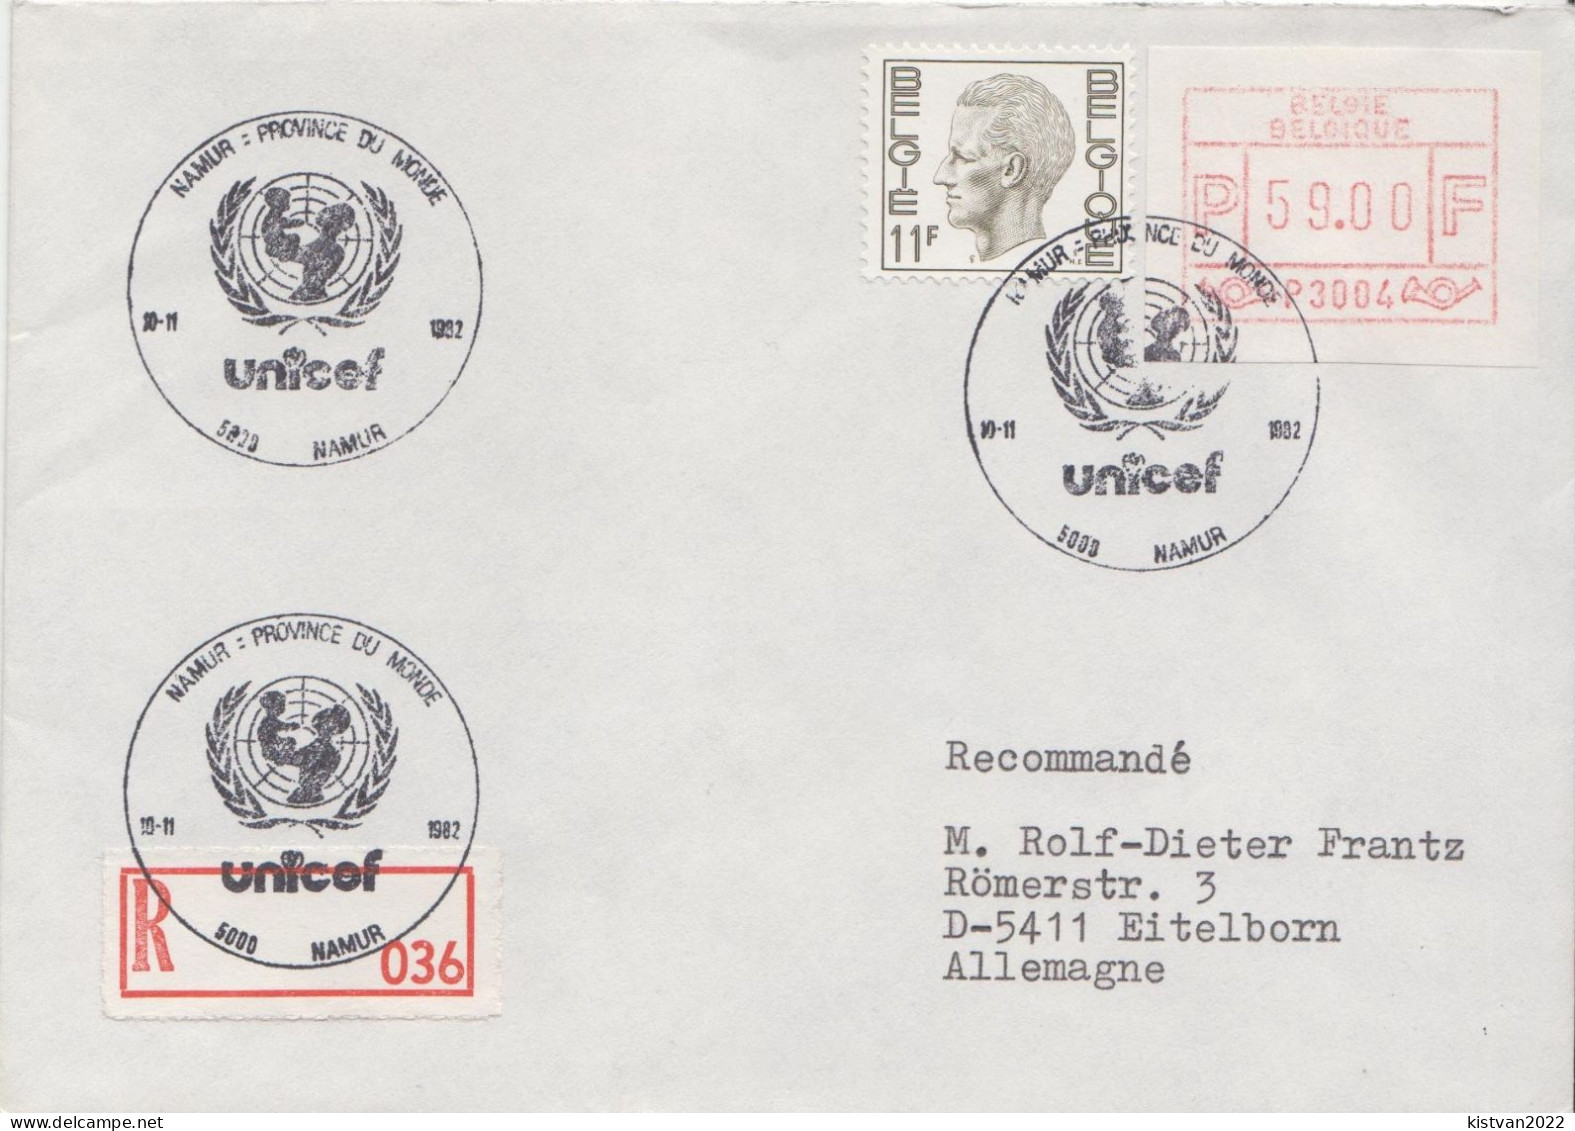 Postal History: Belgium R Cover With Automat Stamp - Briefe U. Dokumente